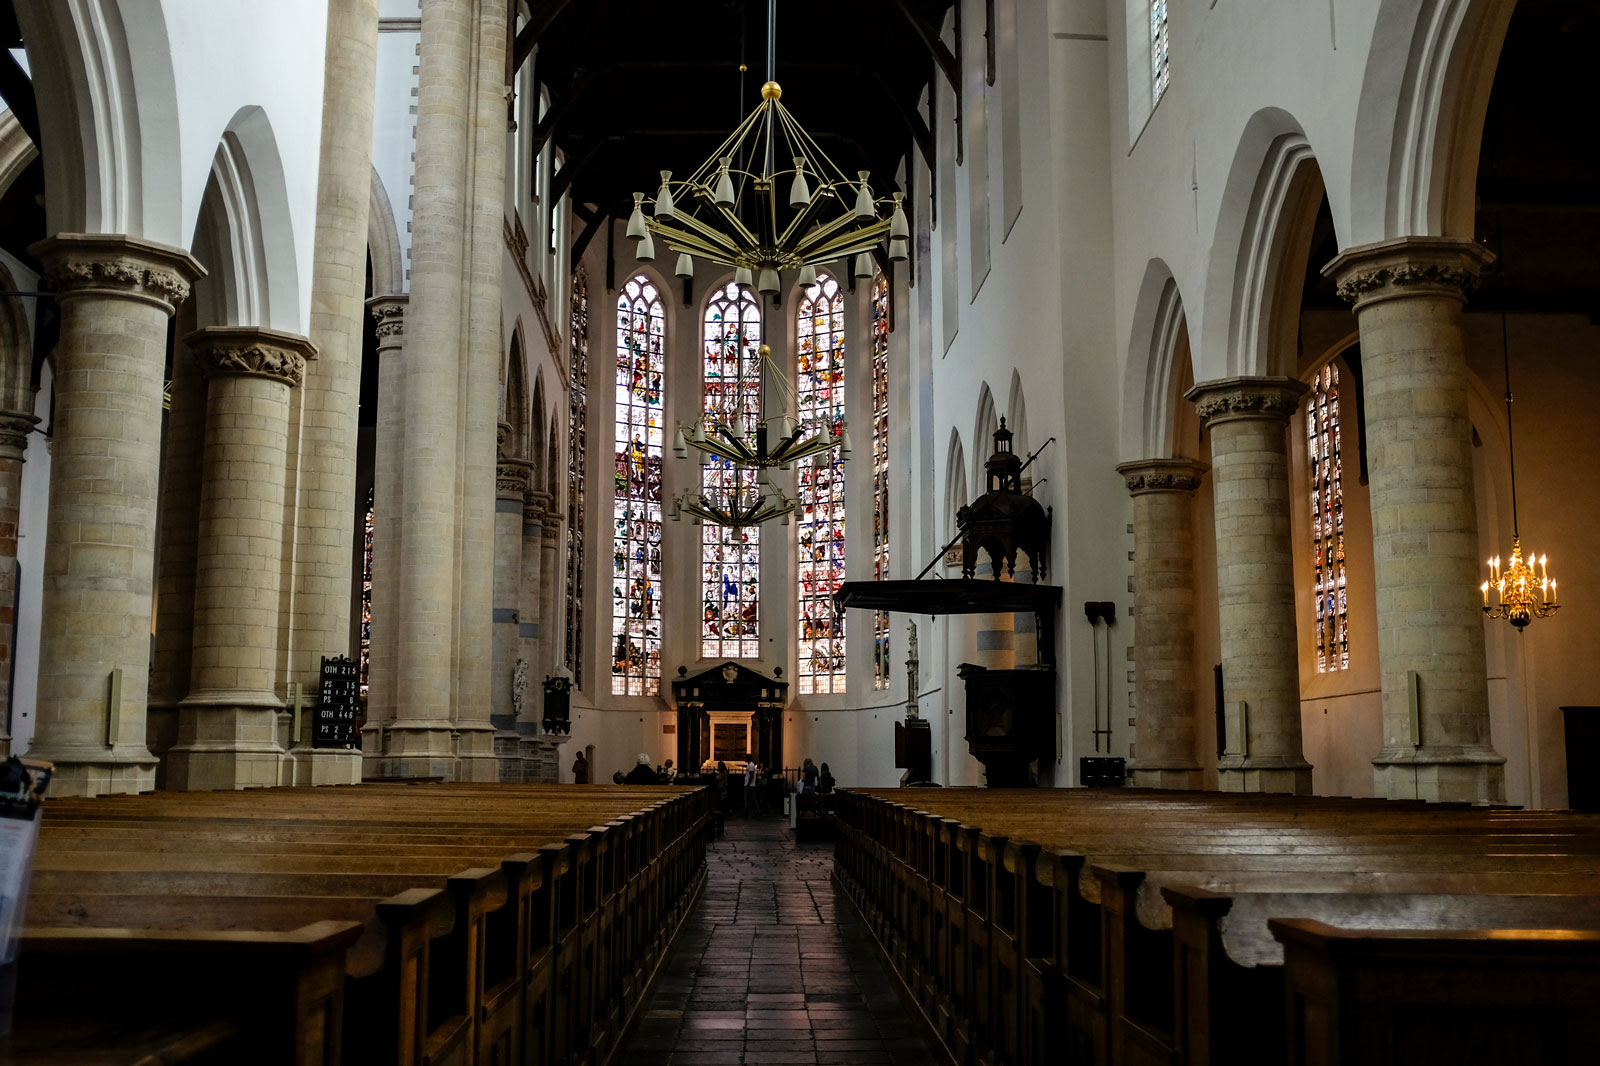 The ornate interior of Delft's Oude Kerk